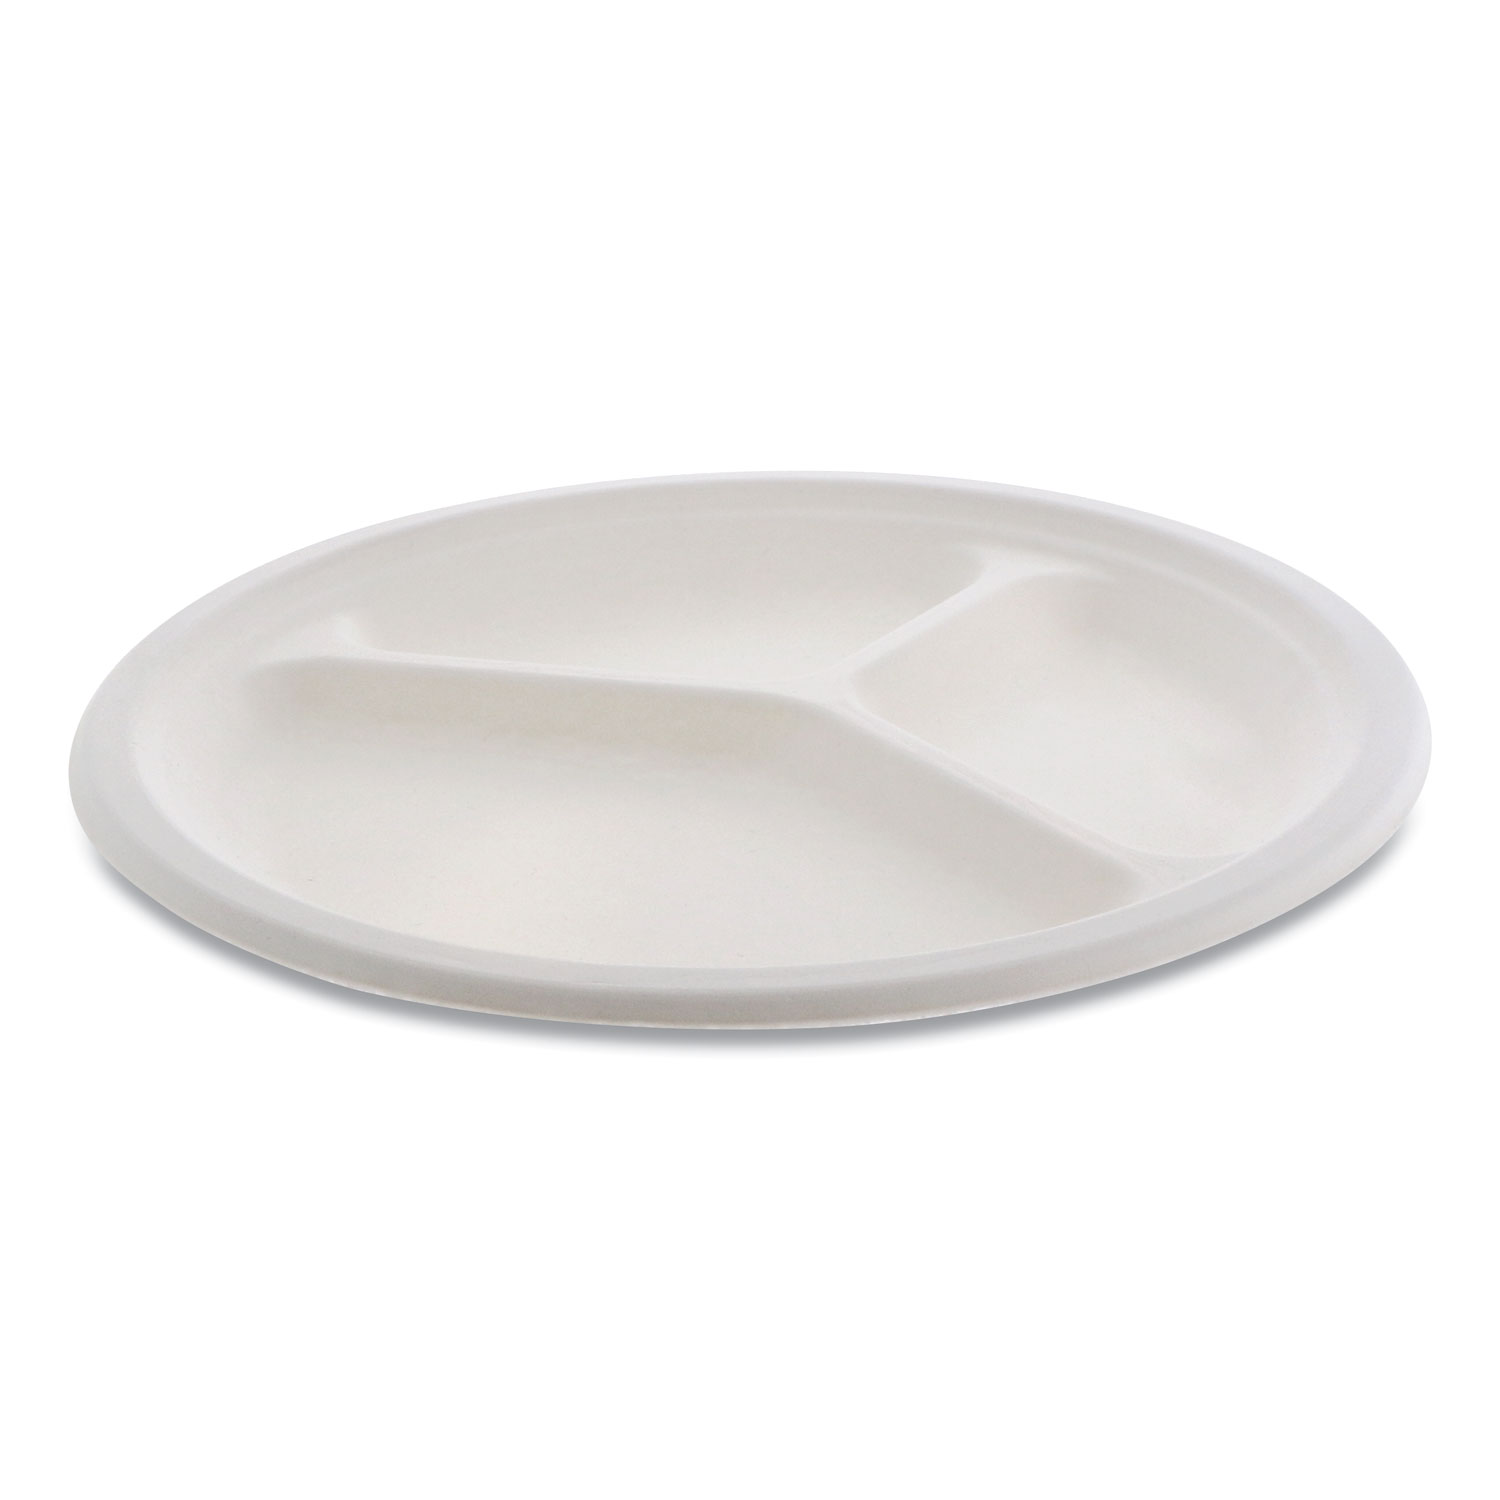 Pactiv EarthChoice Compostable Fiber-Blend Bagasse Dinnerware, 3-Compartment Plate, 10 Diameter, Natural, 500/Carton